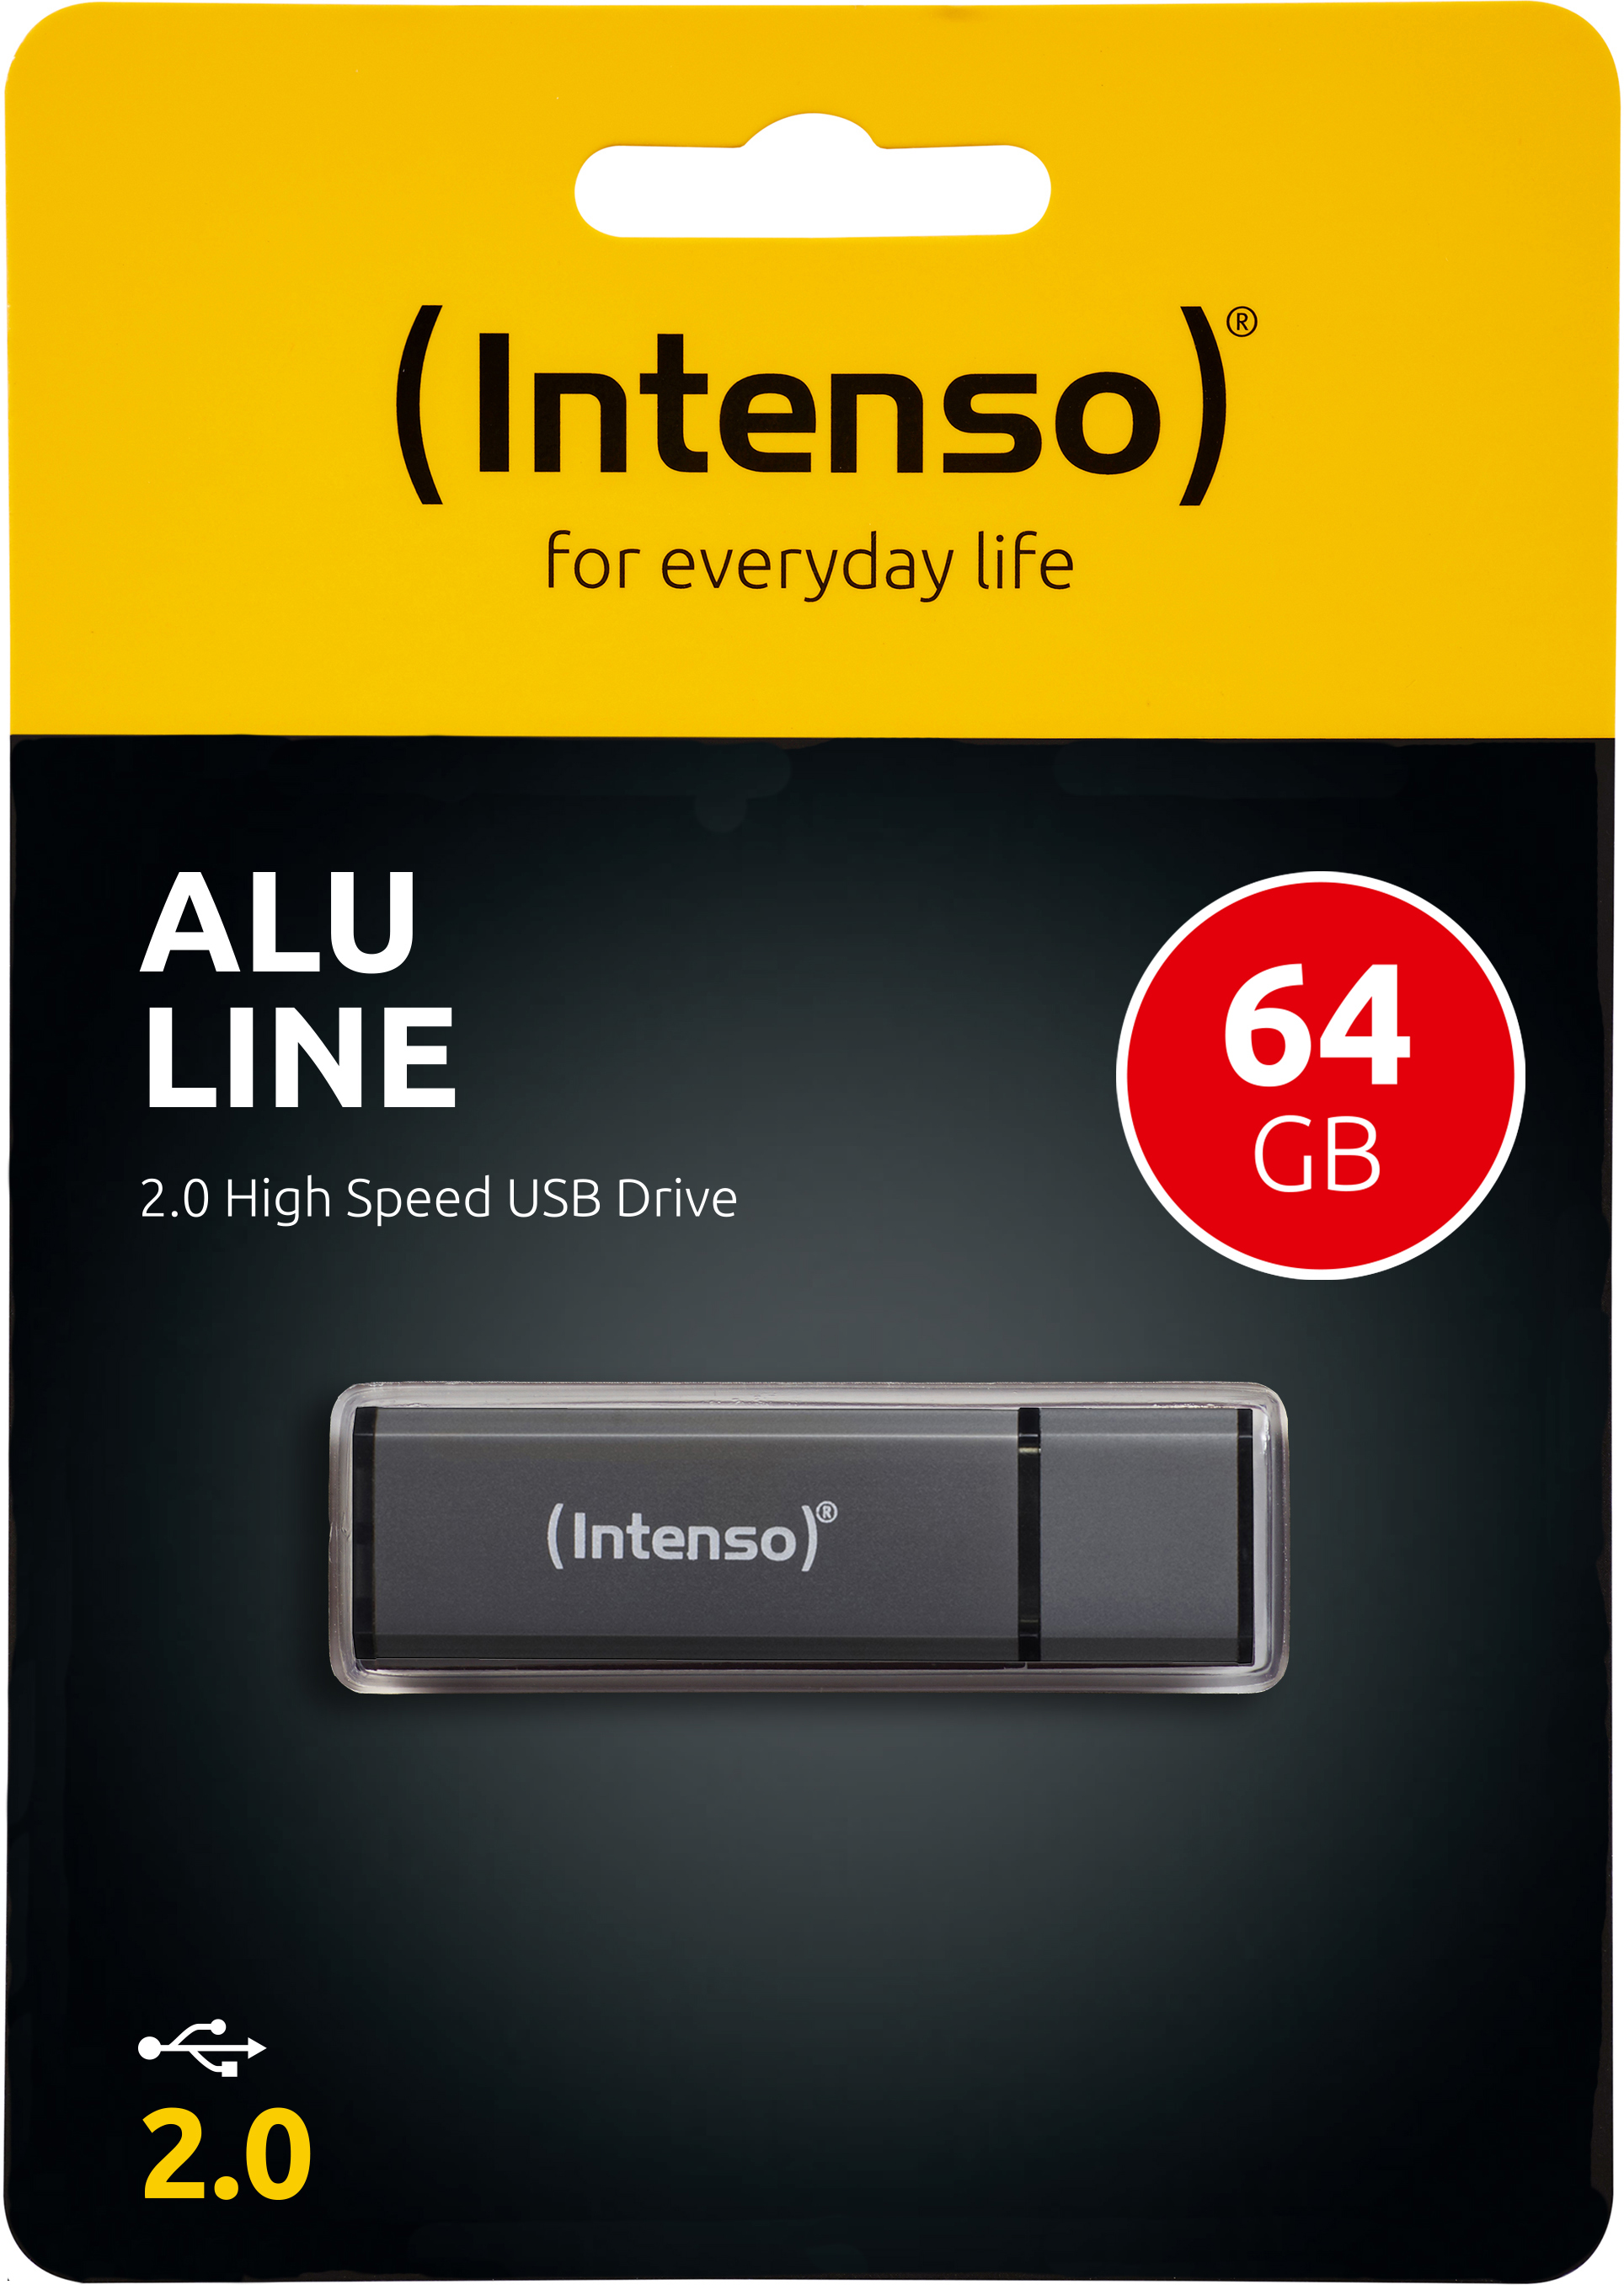 Anthrazit Alu MB/s, 64 INTENSO GB, 28 USB-Stick, Line